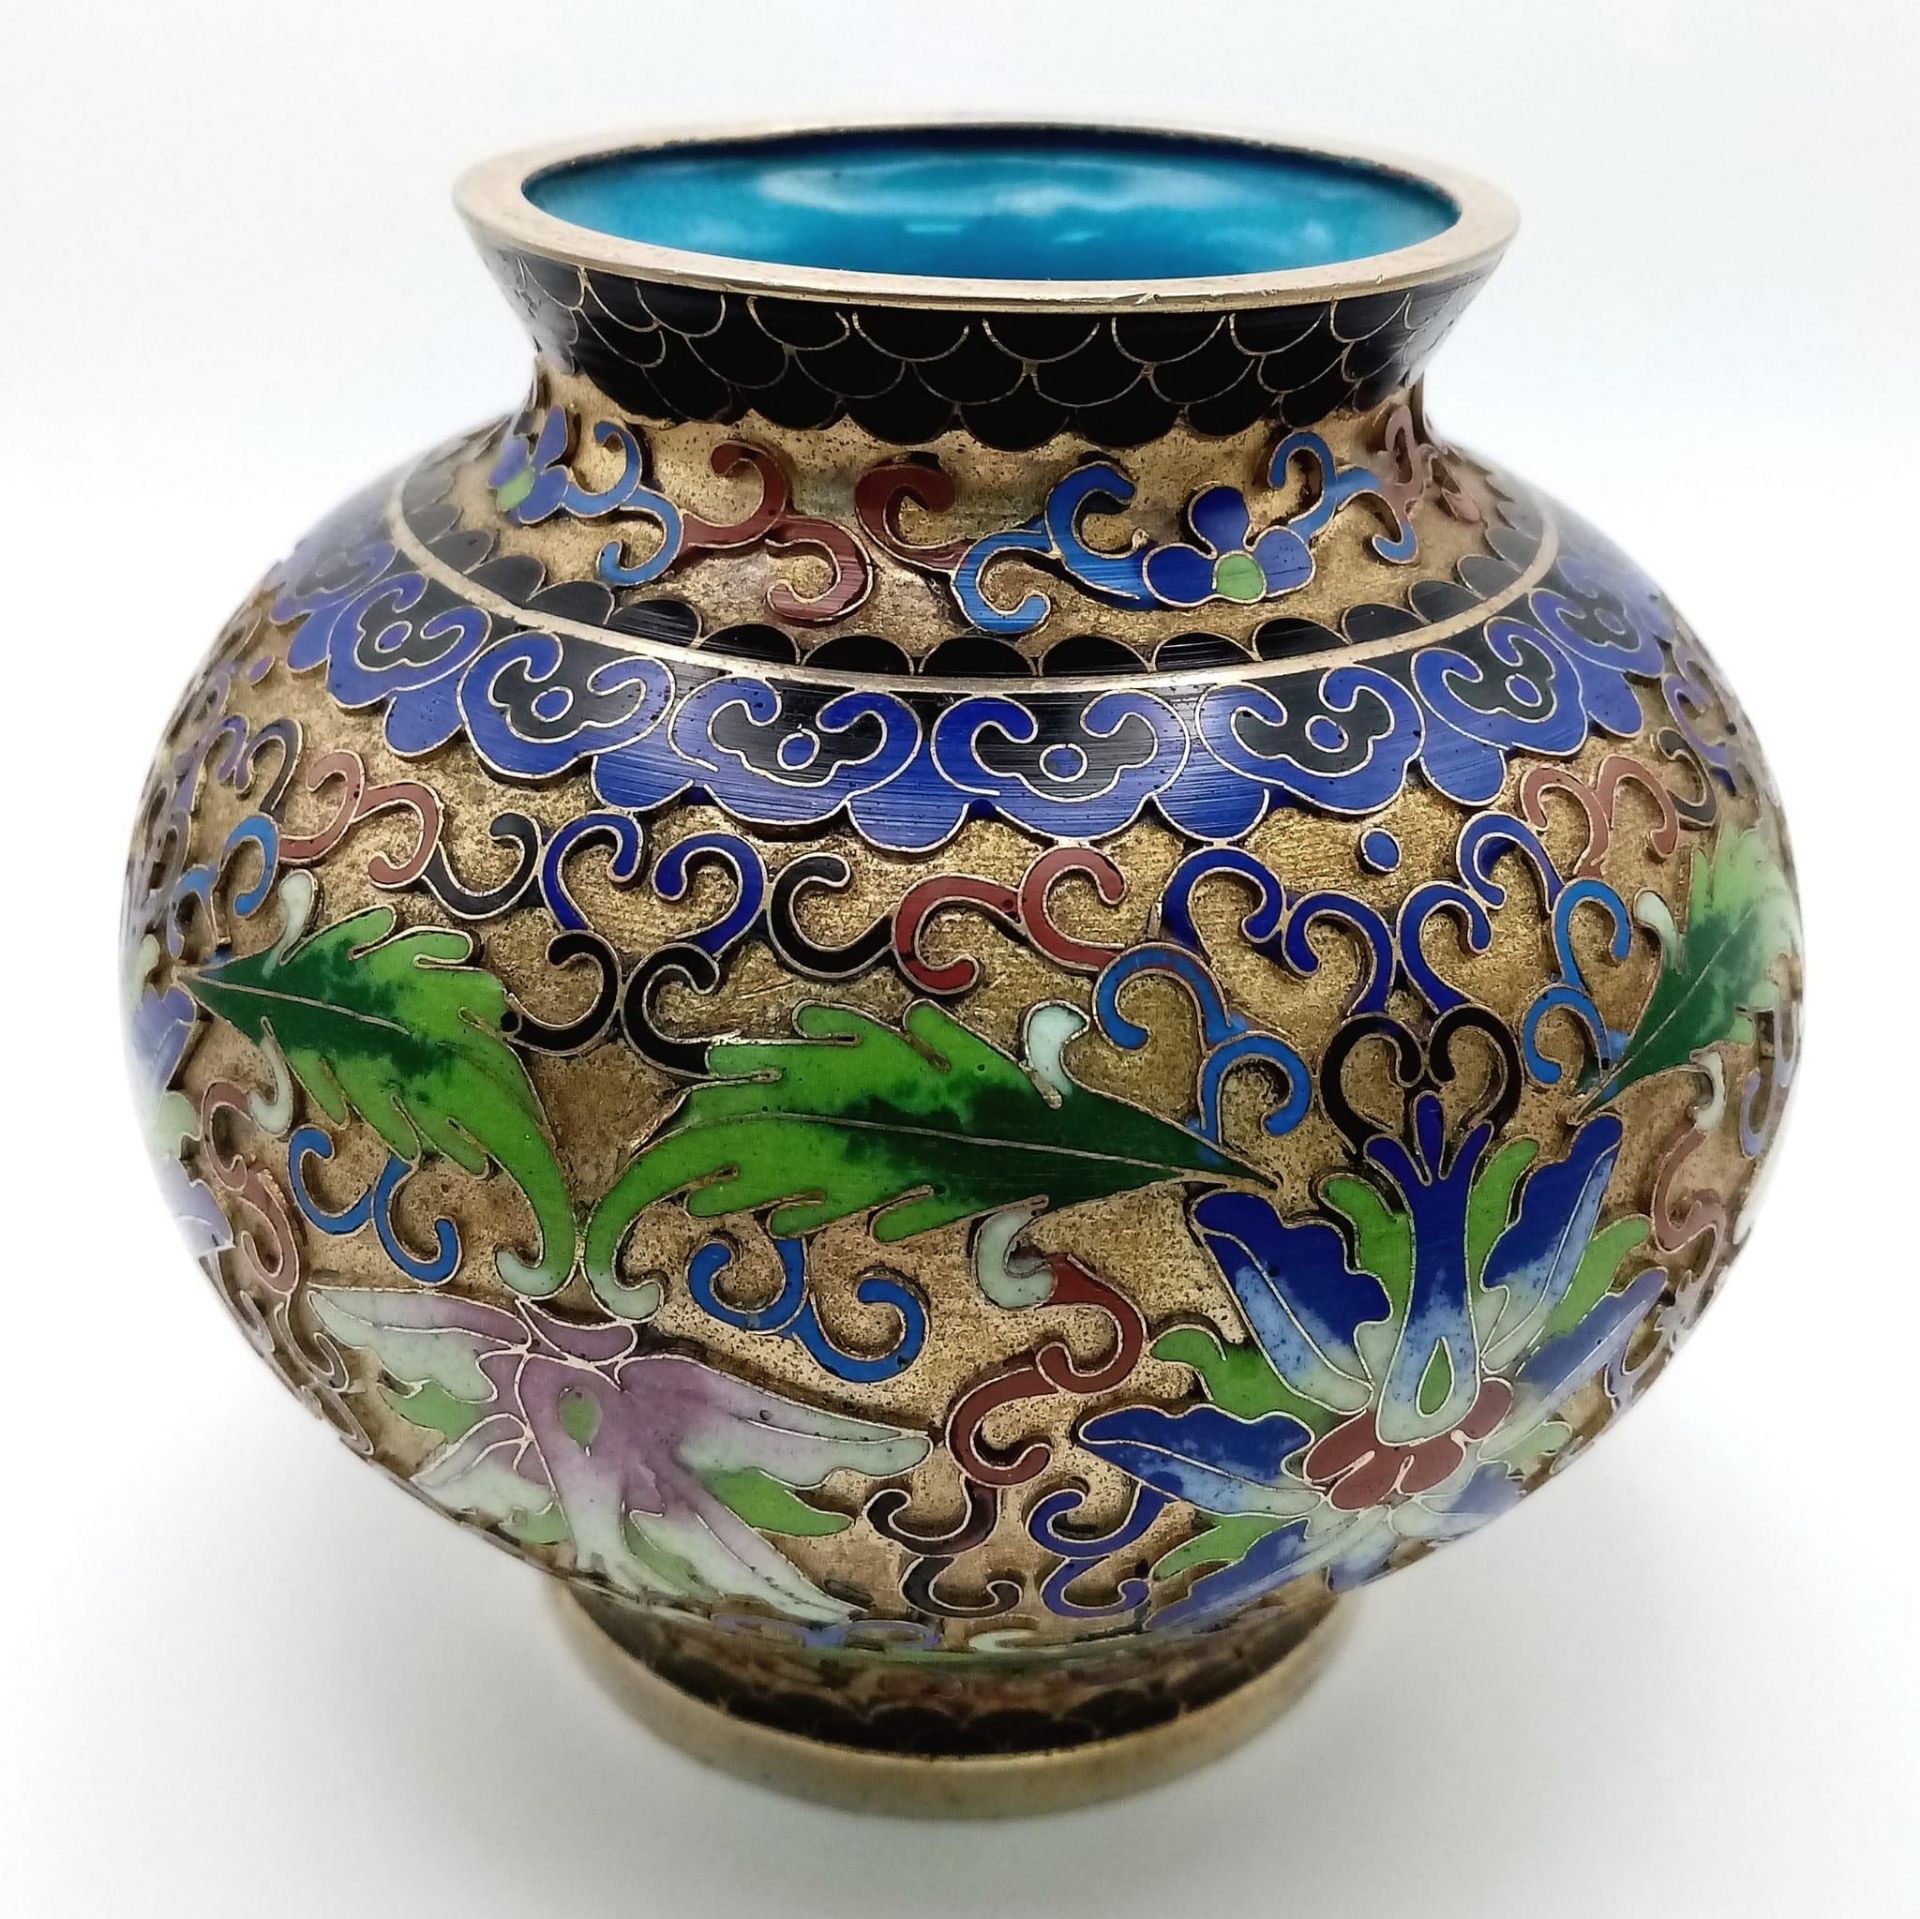 Stunning vintage Chinese Cloisonné Enamel Circular Pot. Wonderful floral decoration against a gold - Bild 6 aus 14